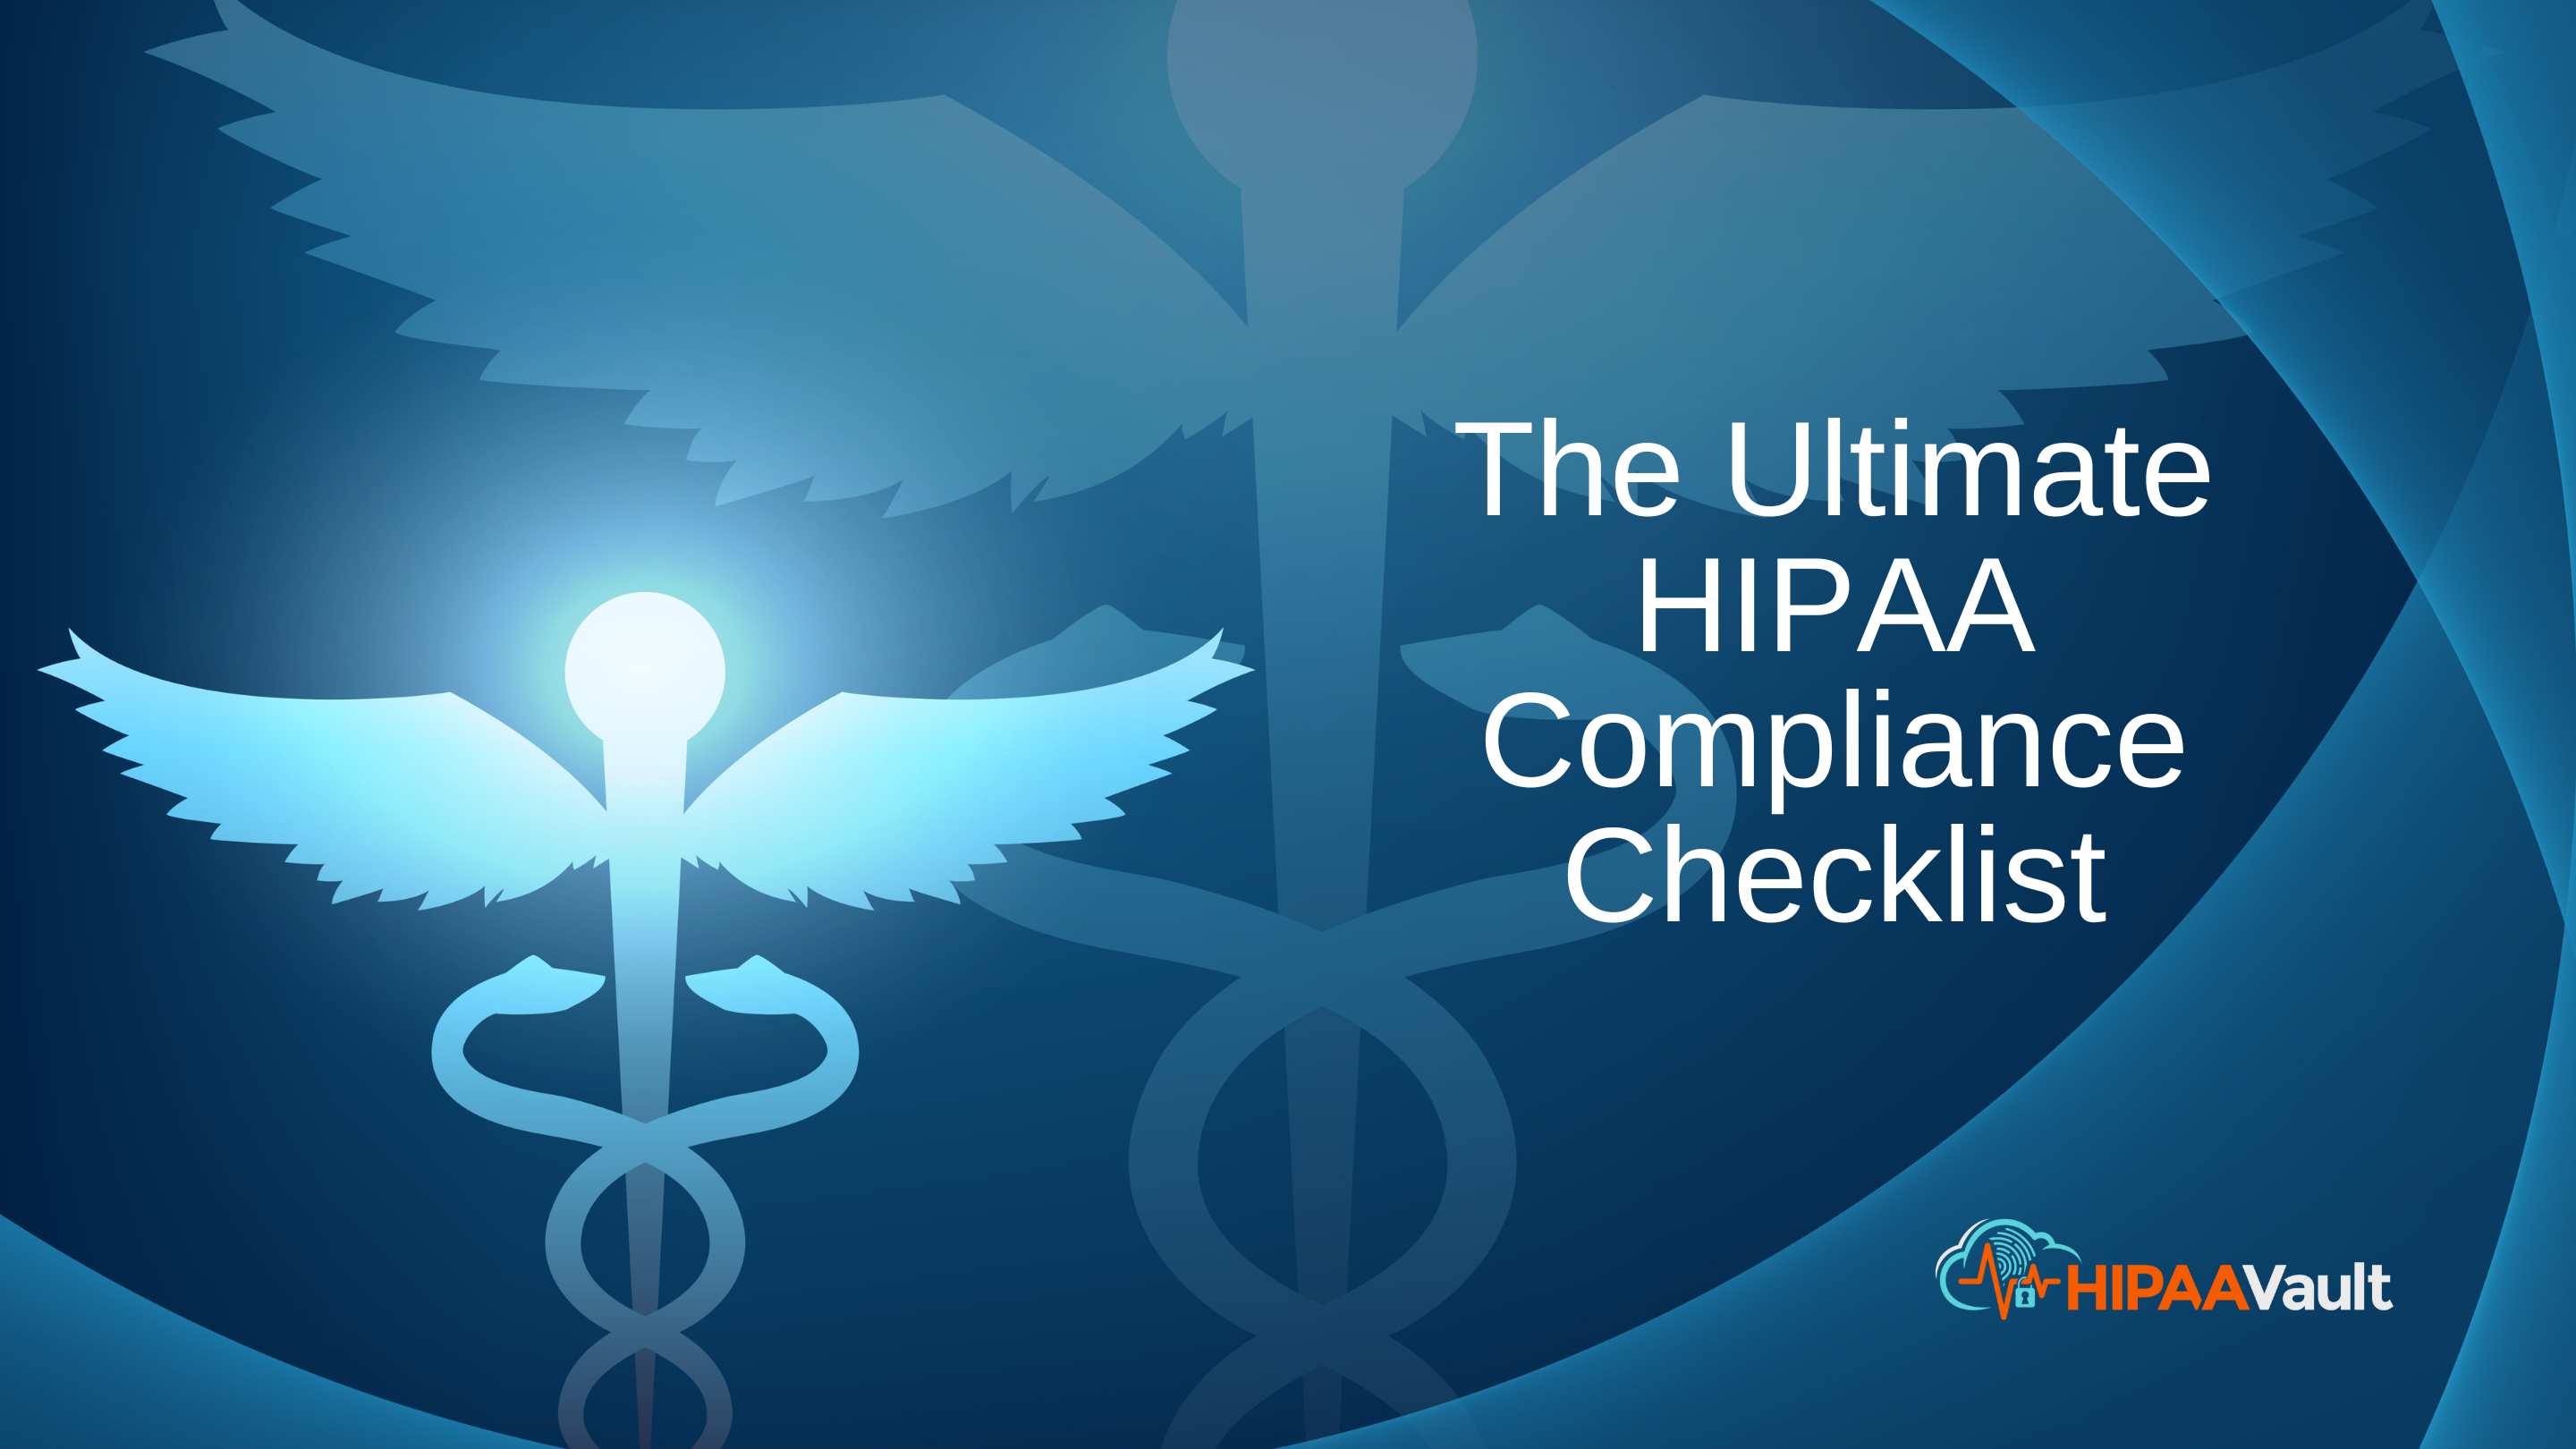 The Ultimate HIPAA Compliance Checklist